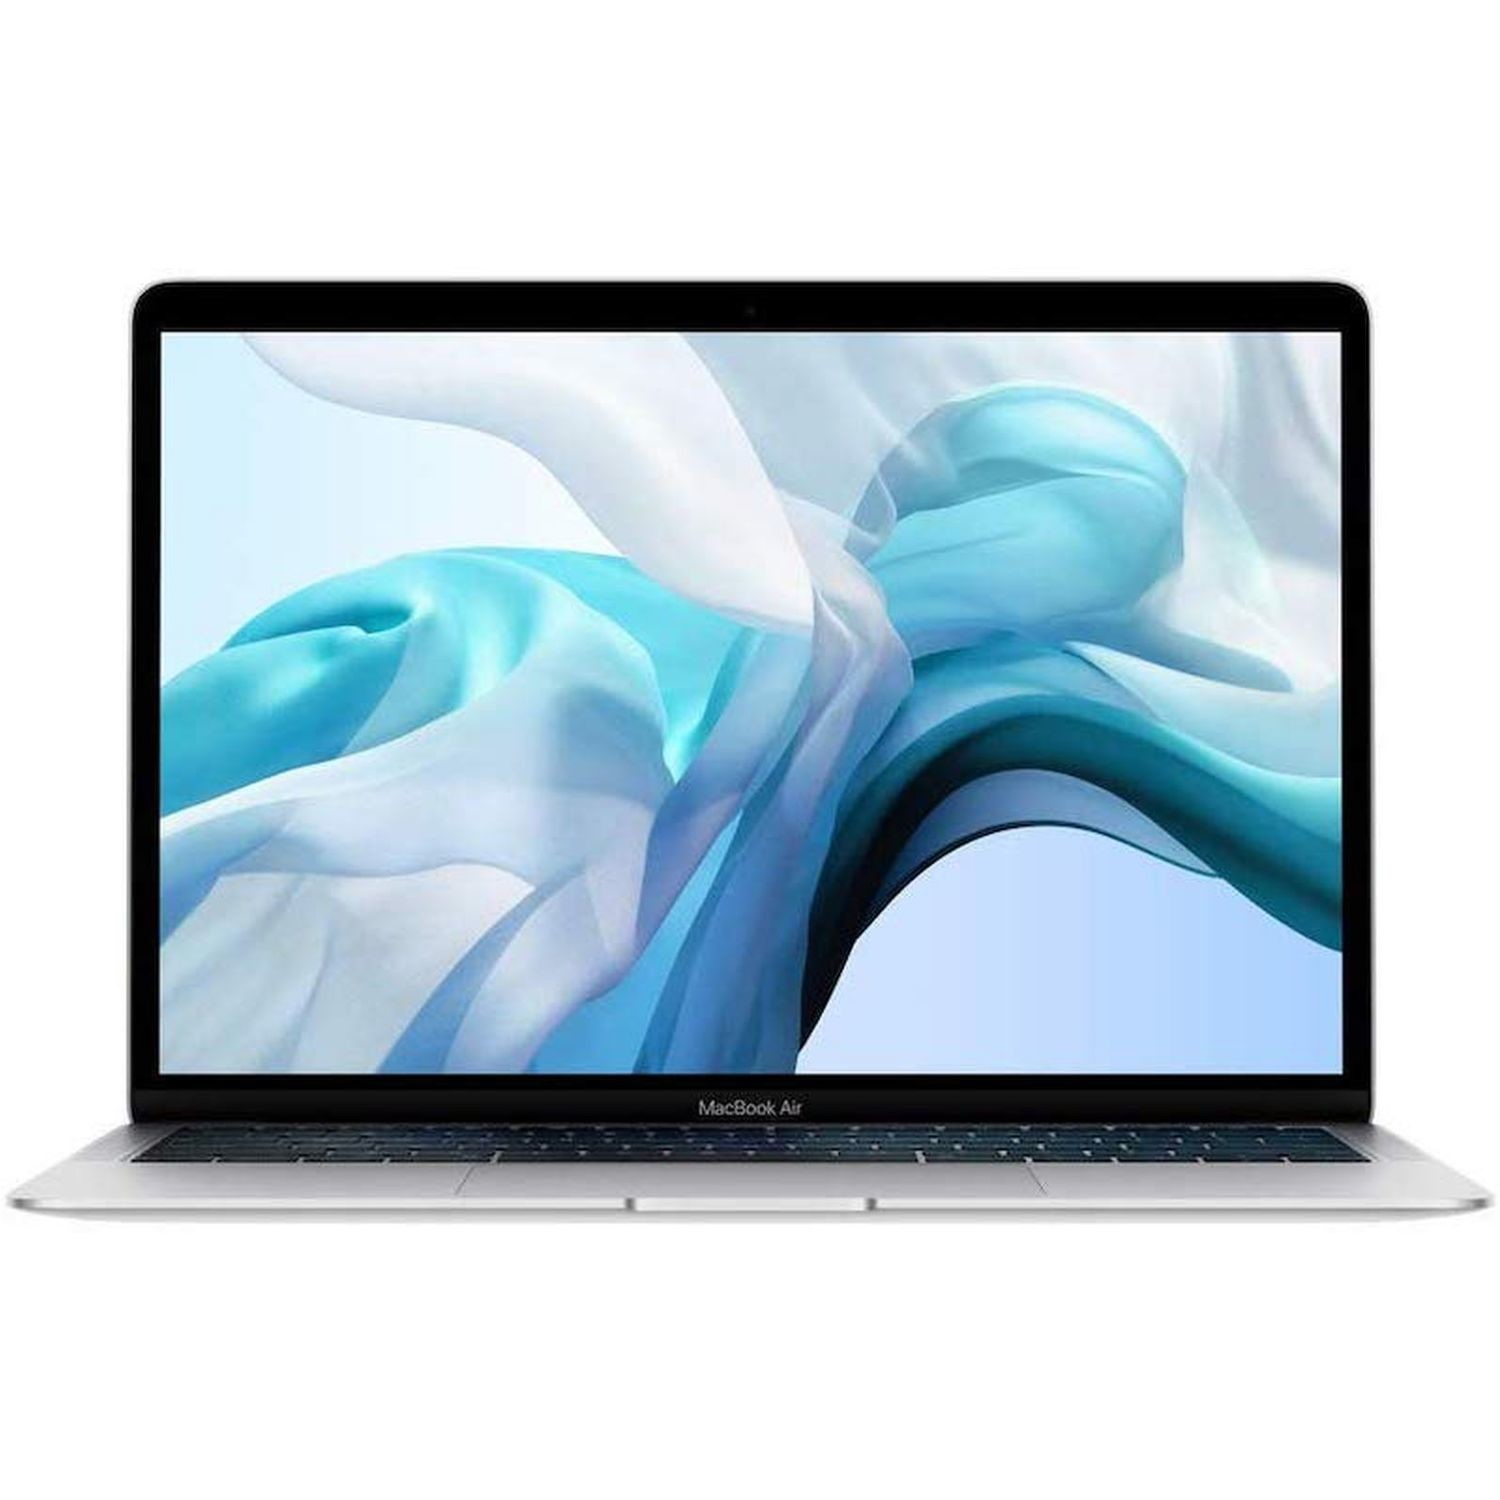 Refurbished Apple Macbook Air Dual Core i5-8210 16GB 500GB 13 Inch Laptop  2019 Laptops Direct